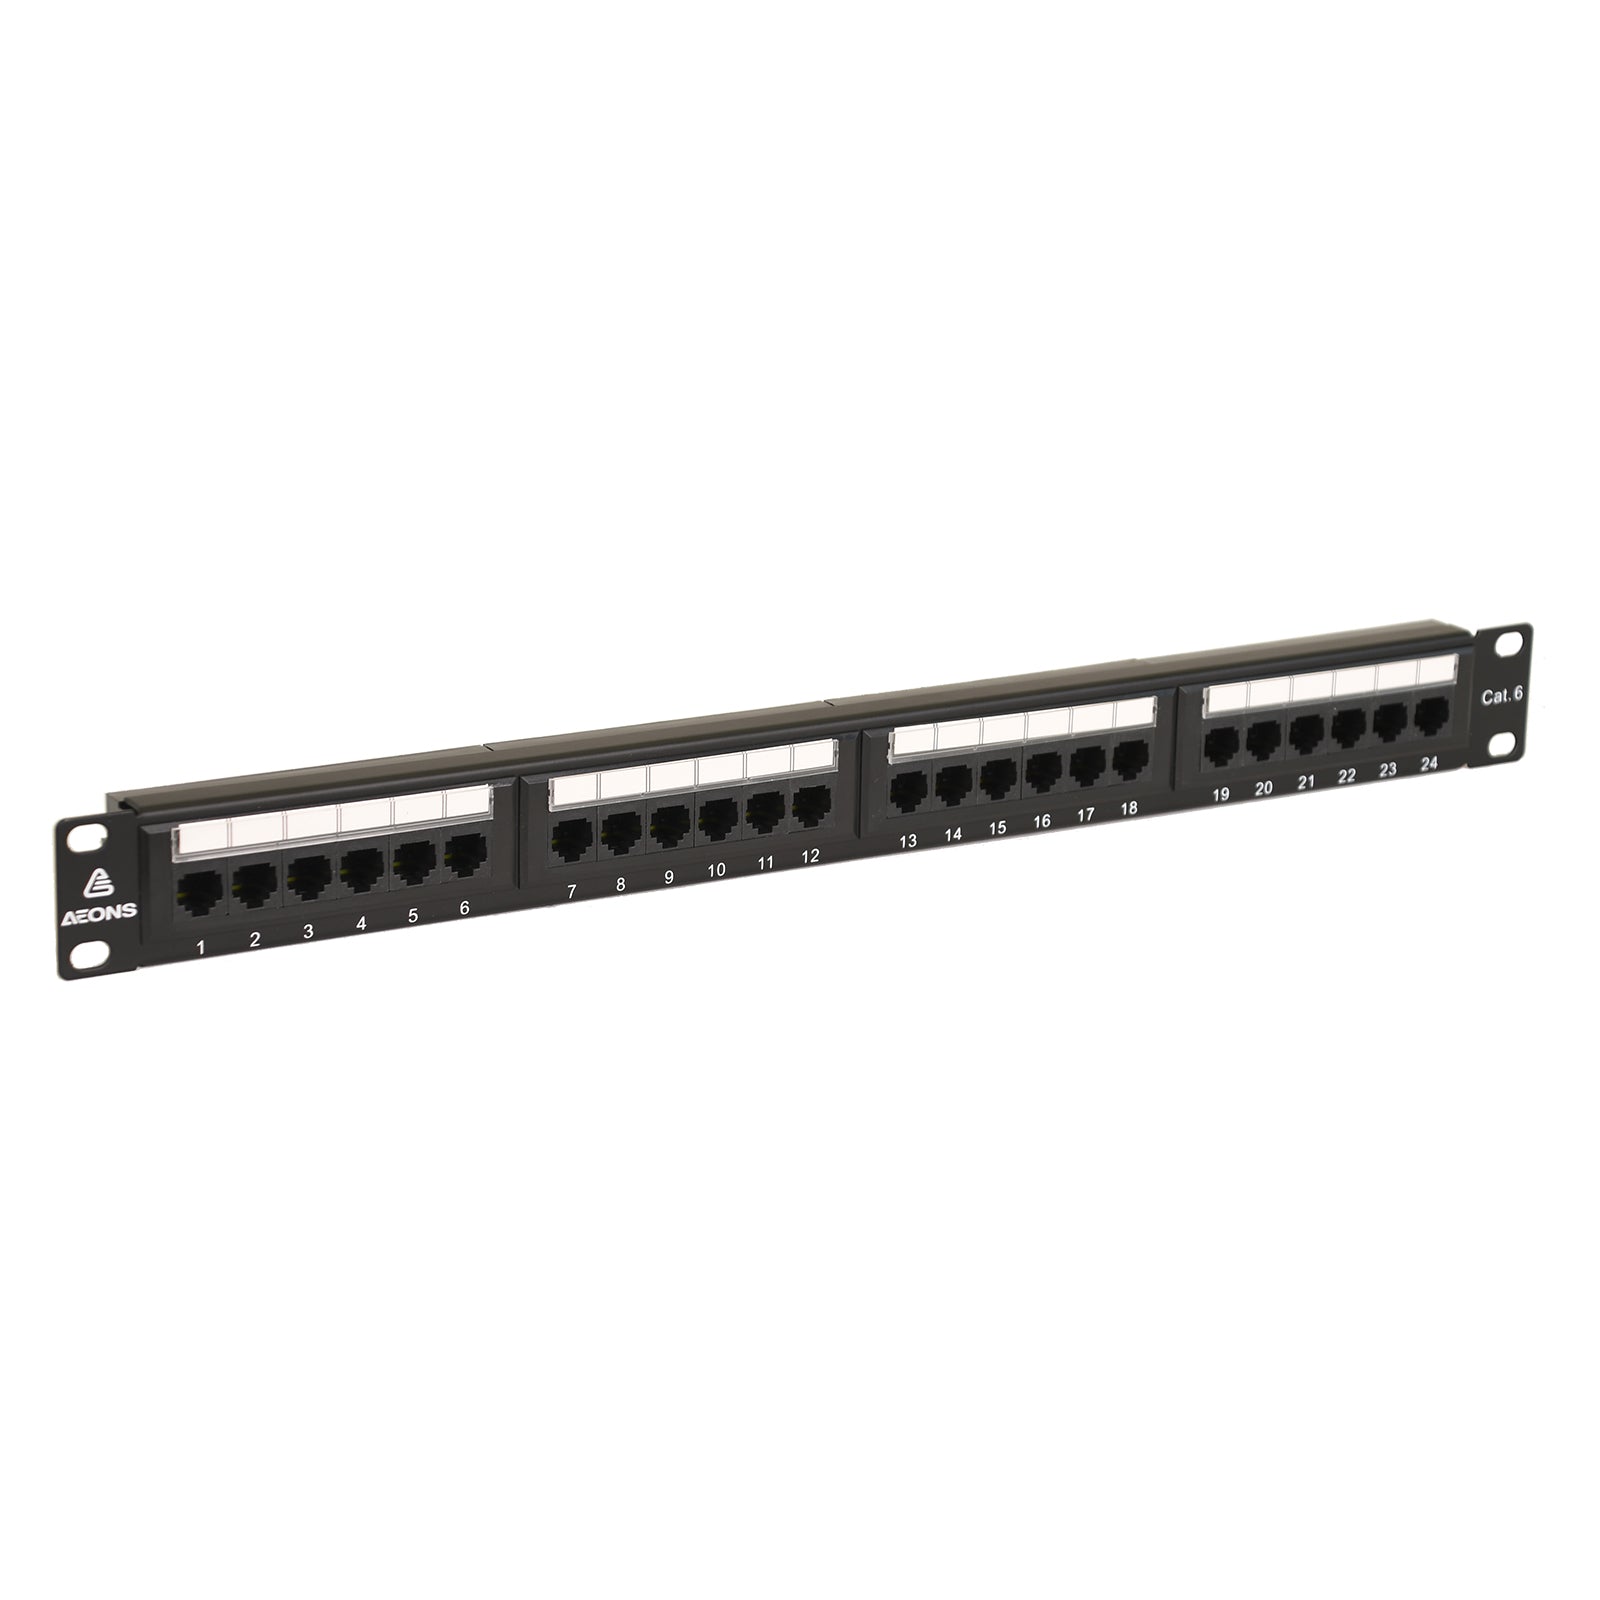 Aeons 24-Port CAT6 UTP Patch Panel, 1U 19-inch Rack Mount Keystone RJ45 Cat 5/5e/6 Gigabit/Fast Ethernet, Cable Management Bar, Black